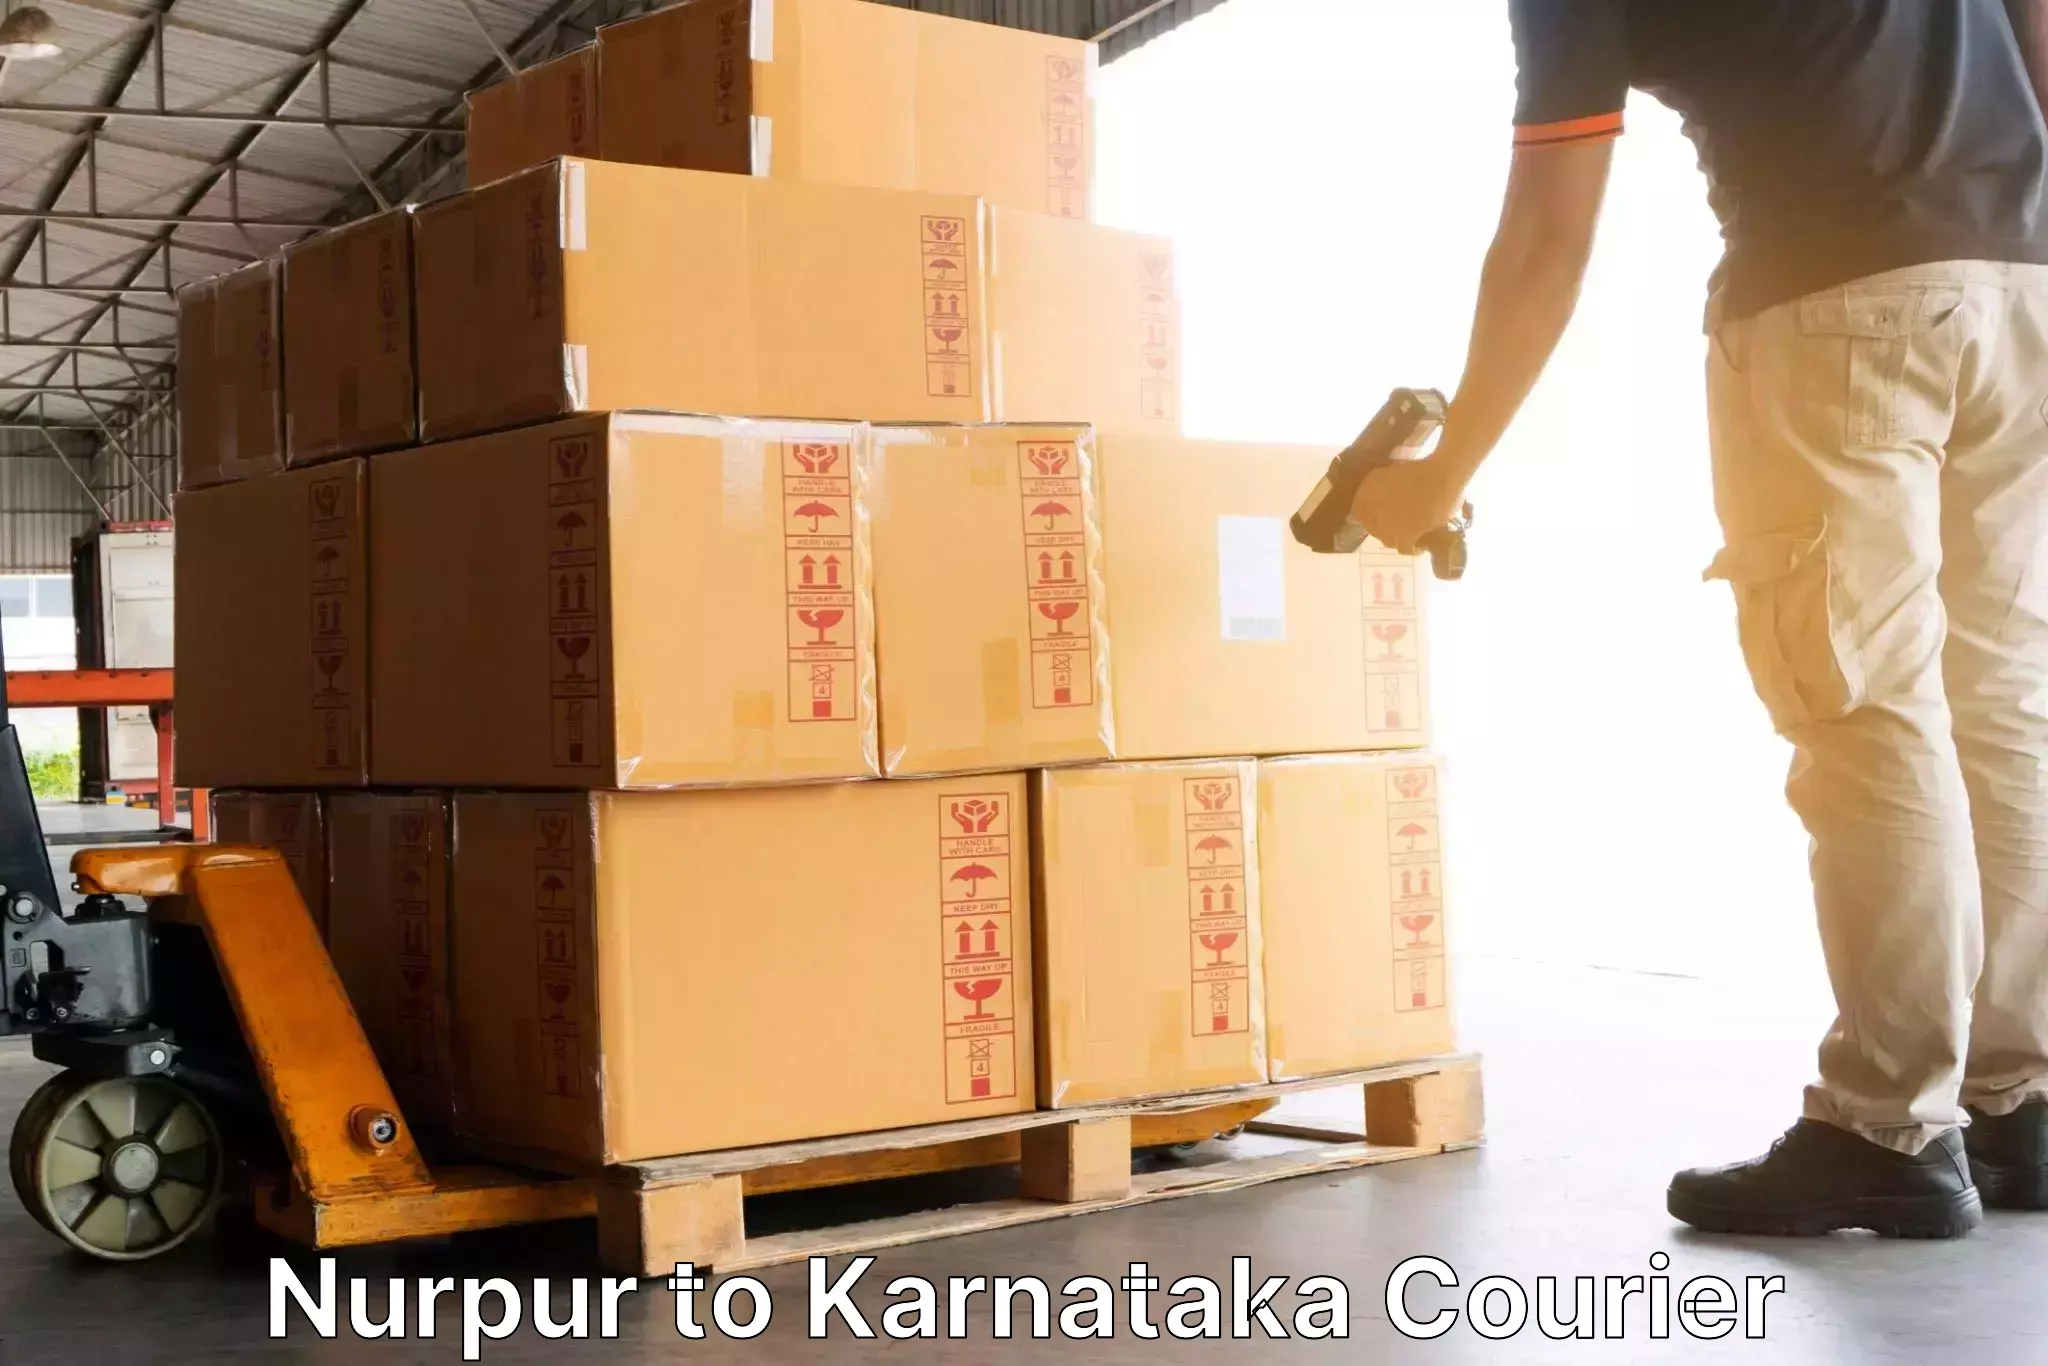 Personalized courier experiences Nurpur to Jagalur